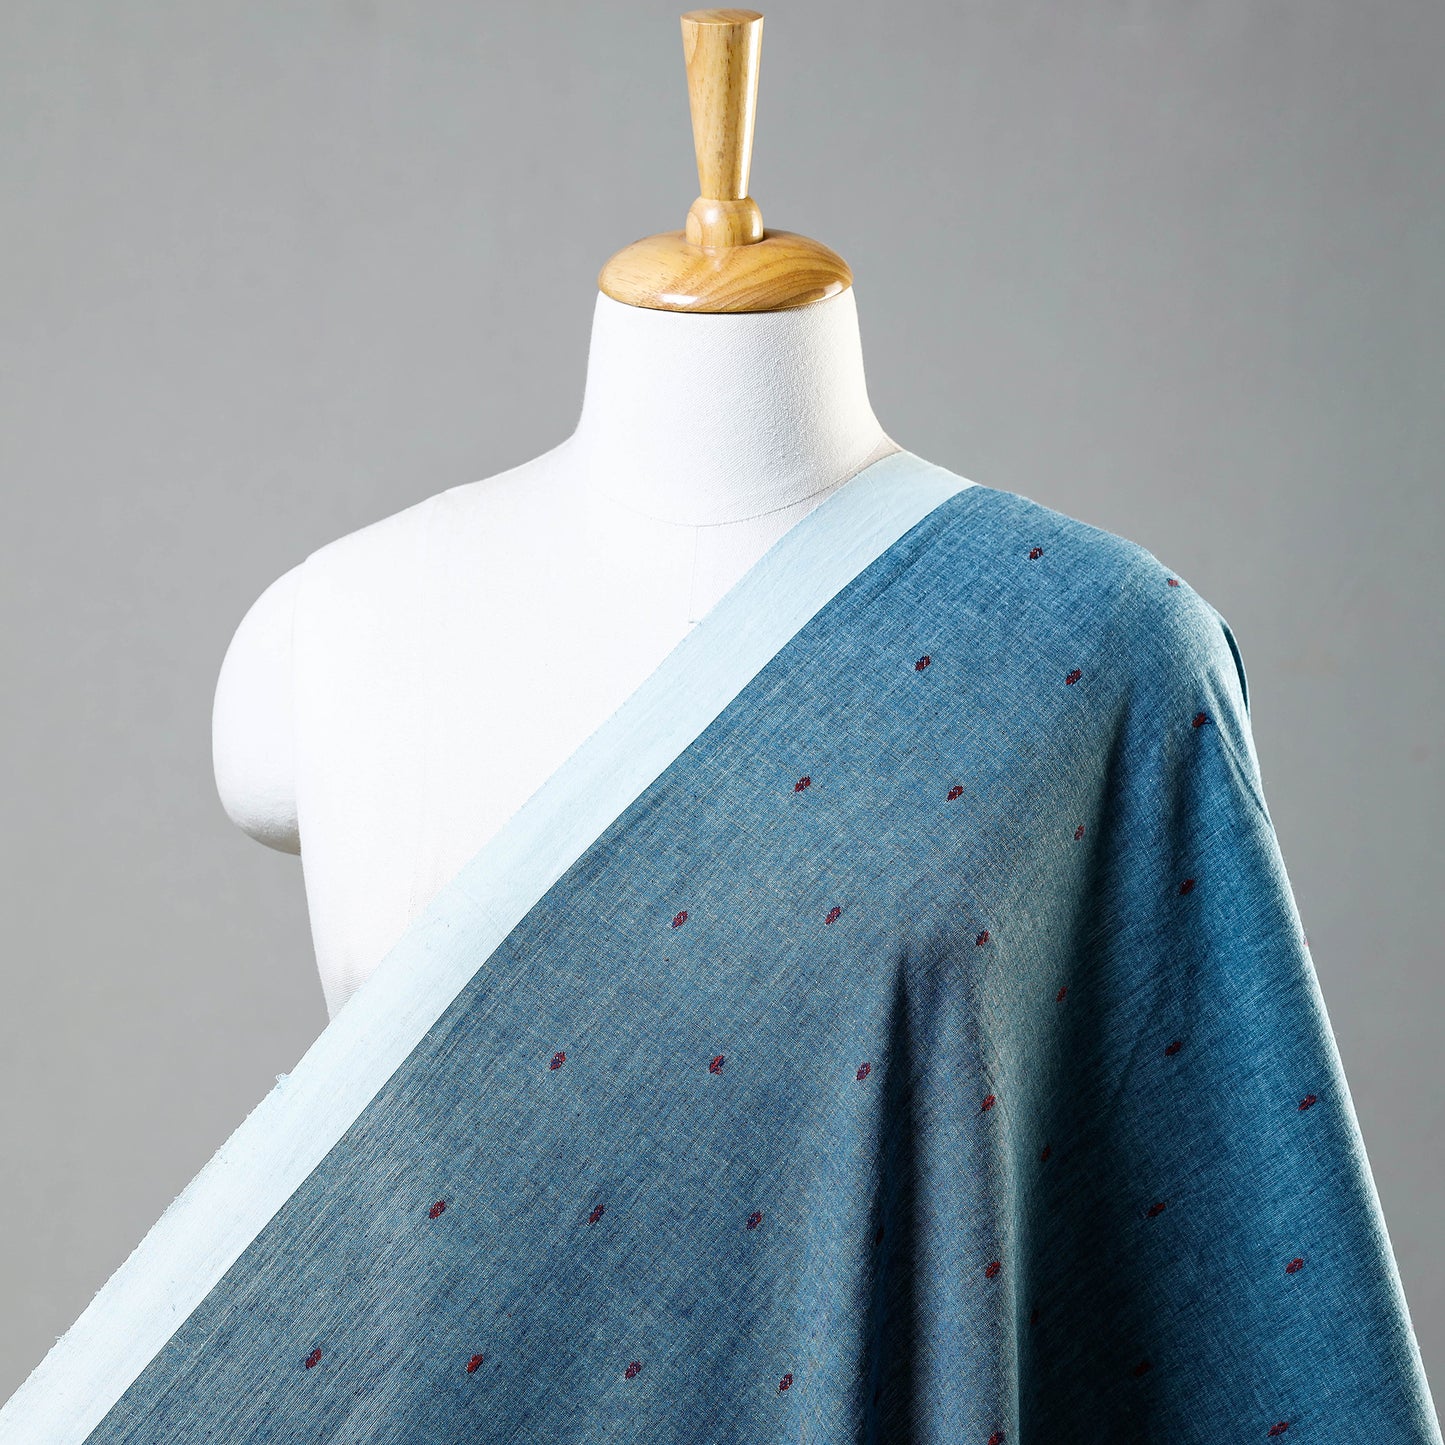 Blue - Jacquard Prewashed Cotton Fabric